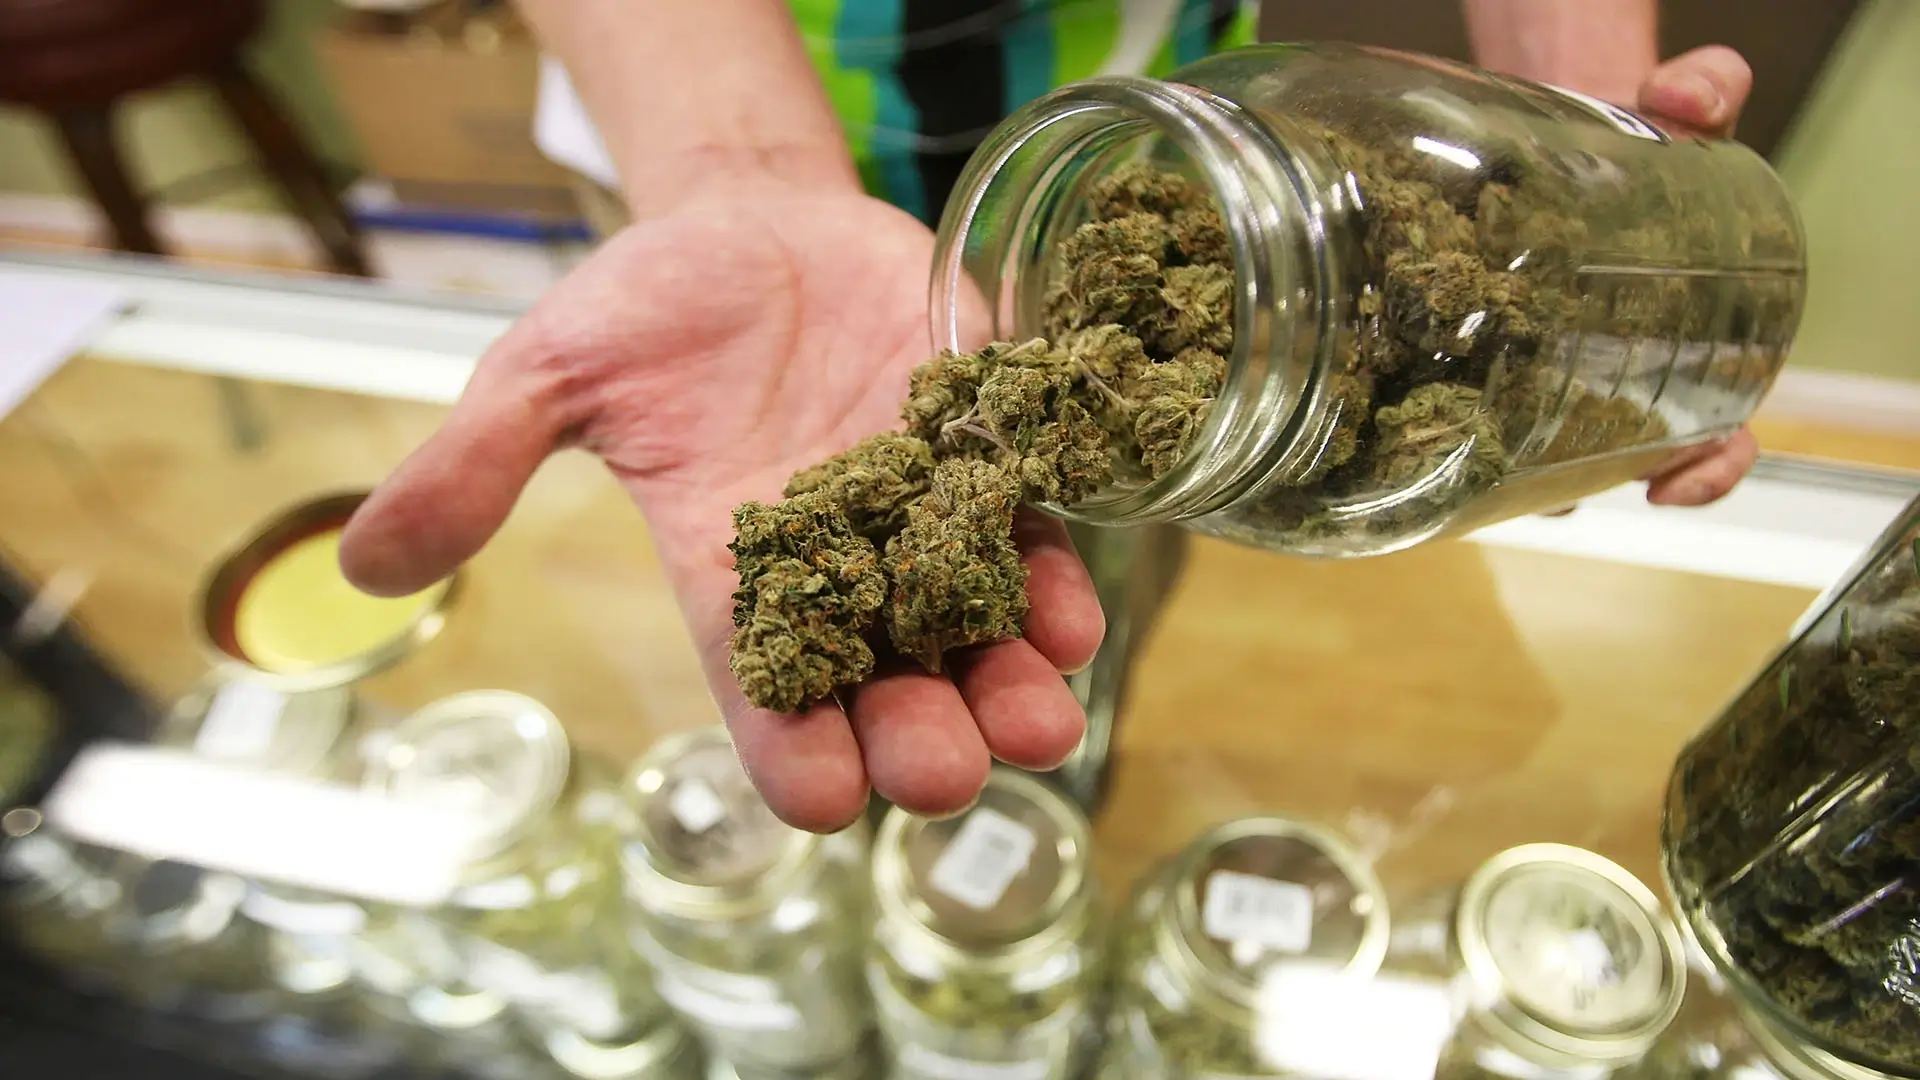 How to Find Safe and Responsible Marijuana Dispensaries in Virginia